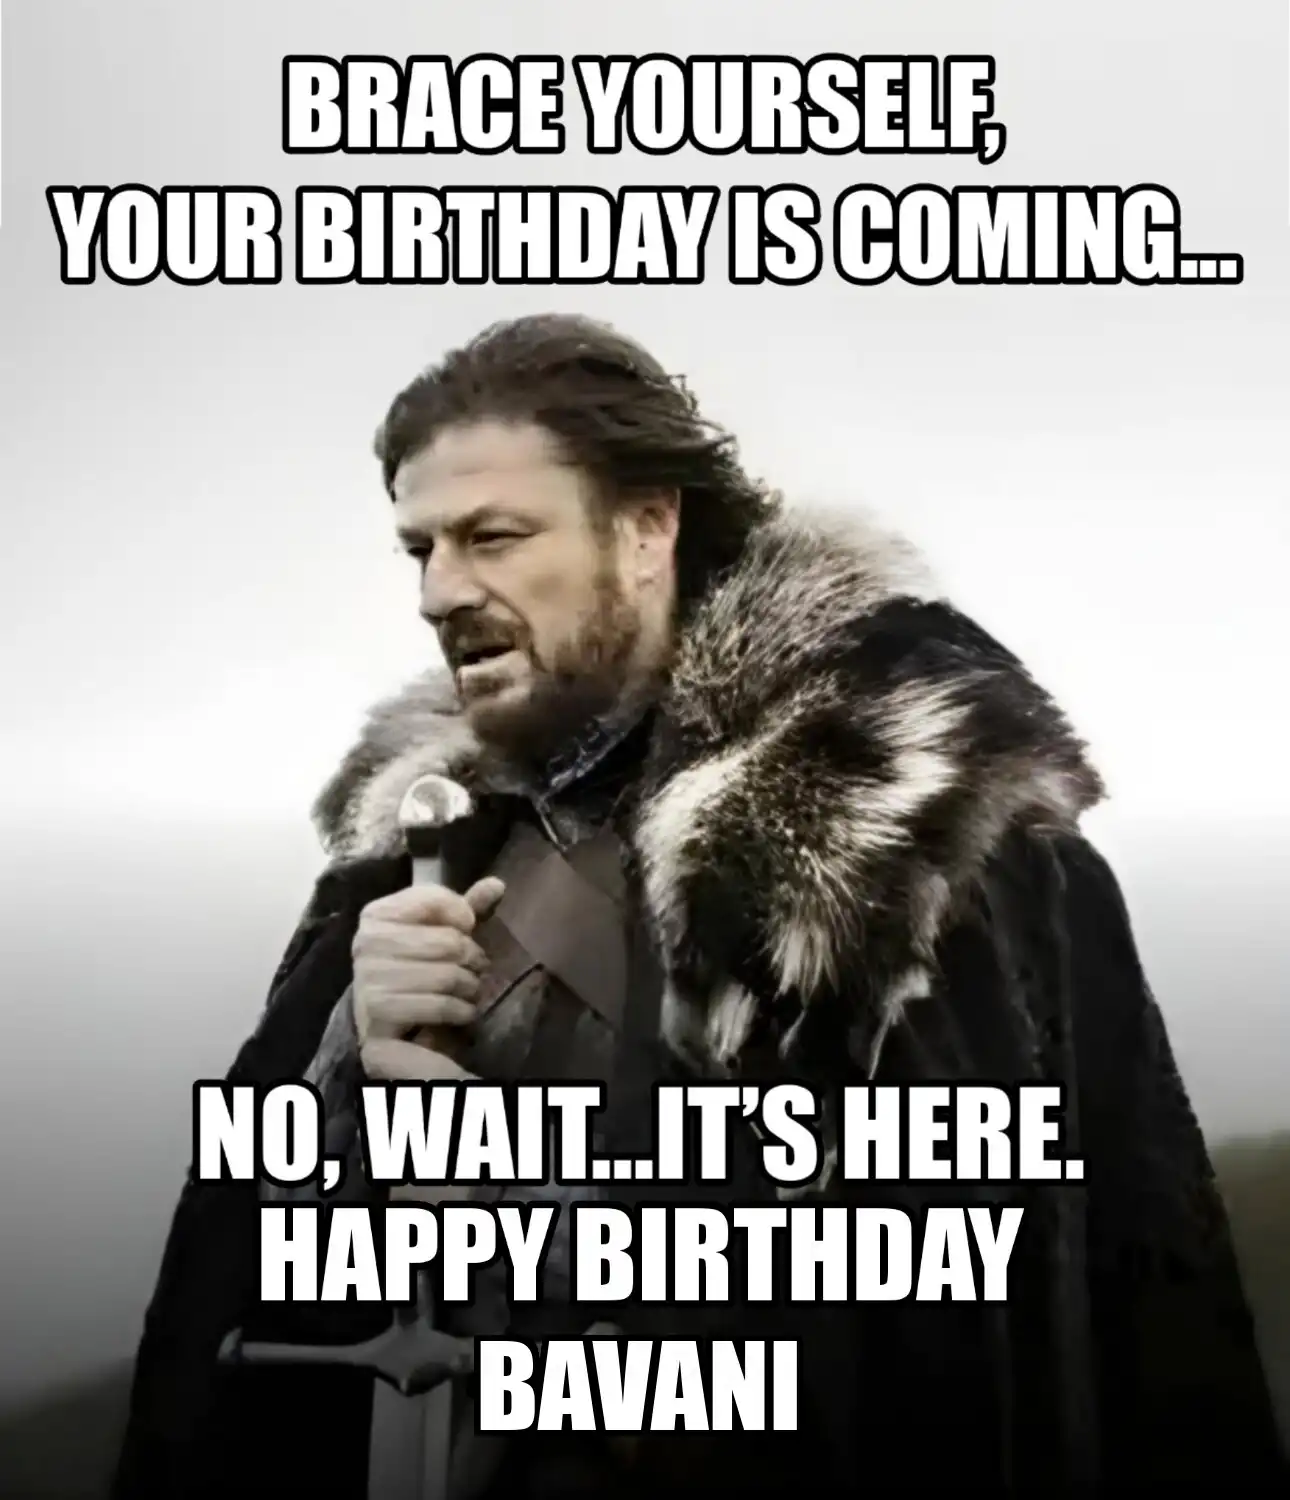 Happy Birthday Bavani Brace Yourself Your Birthday Is Coming Meme